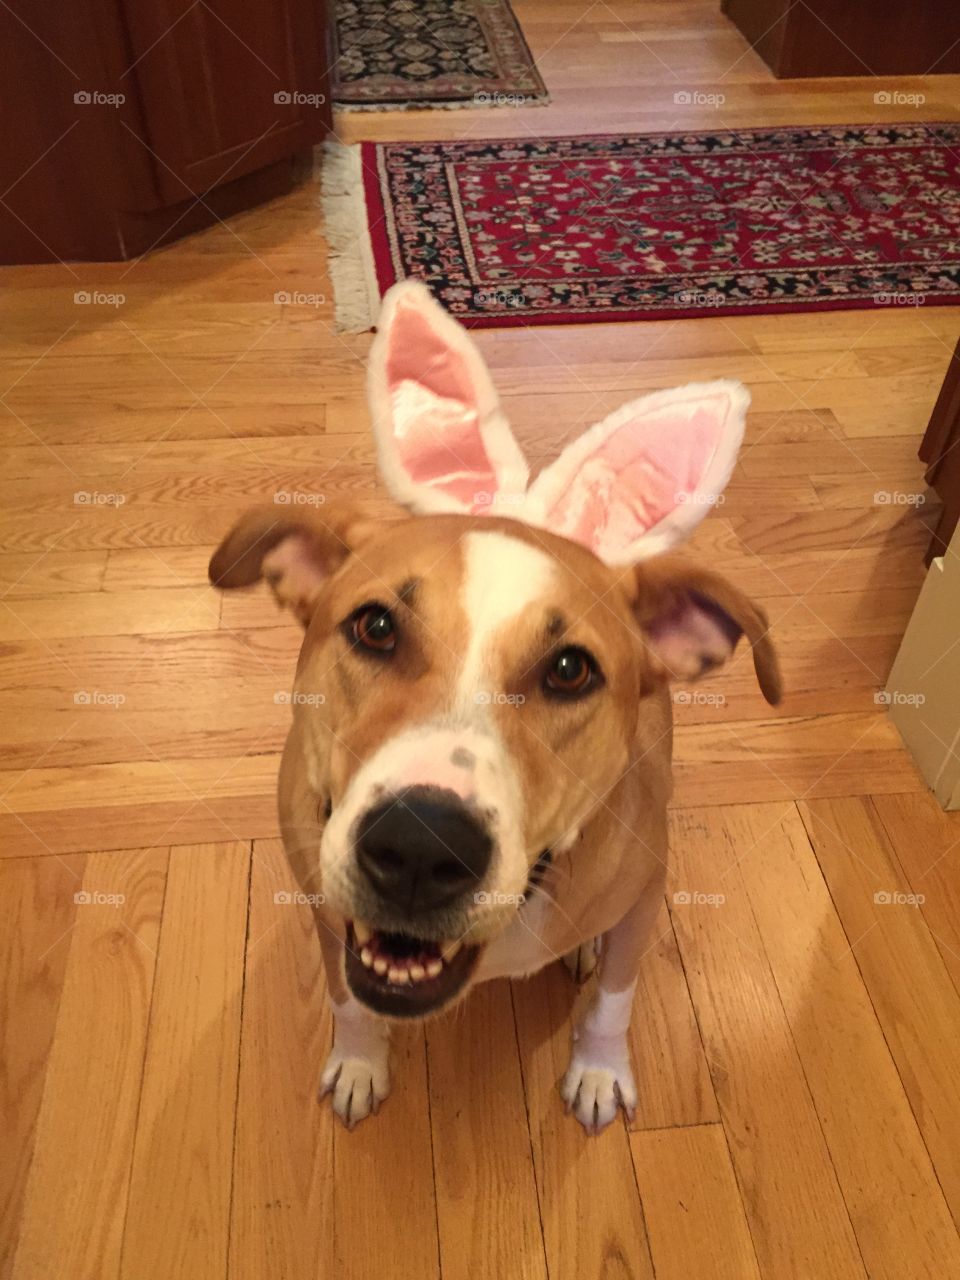 Bunny dog. Dog with bunny ears